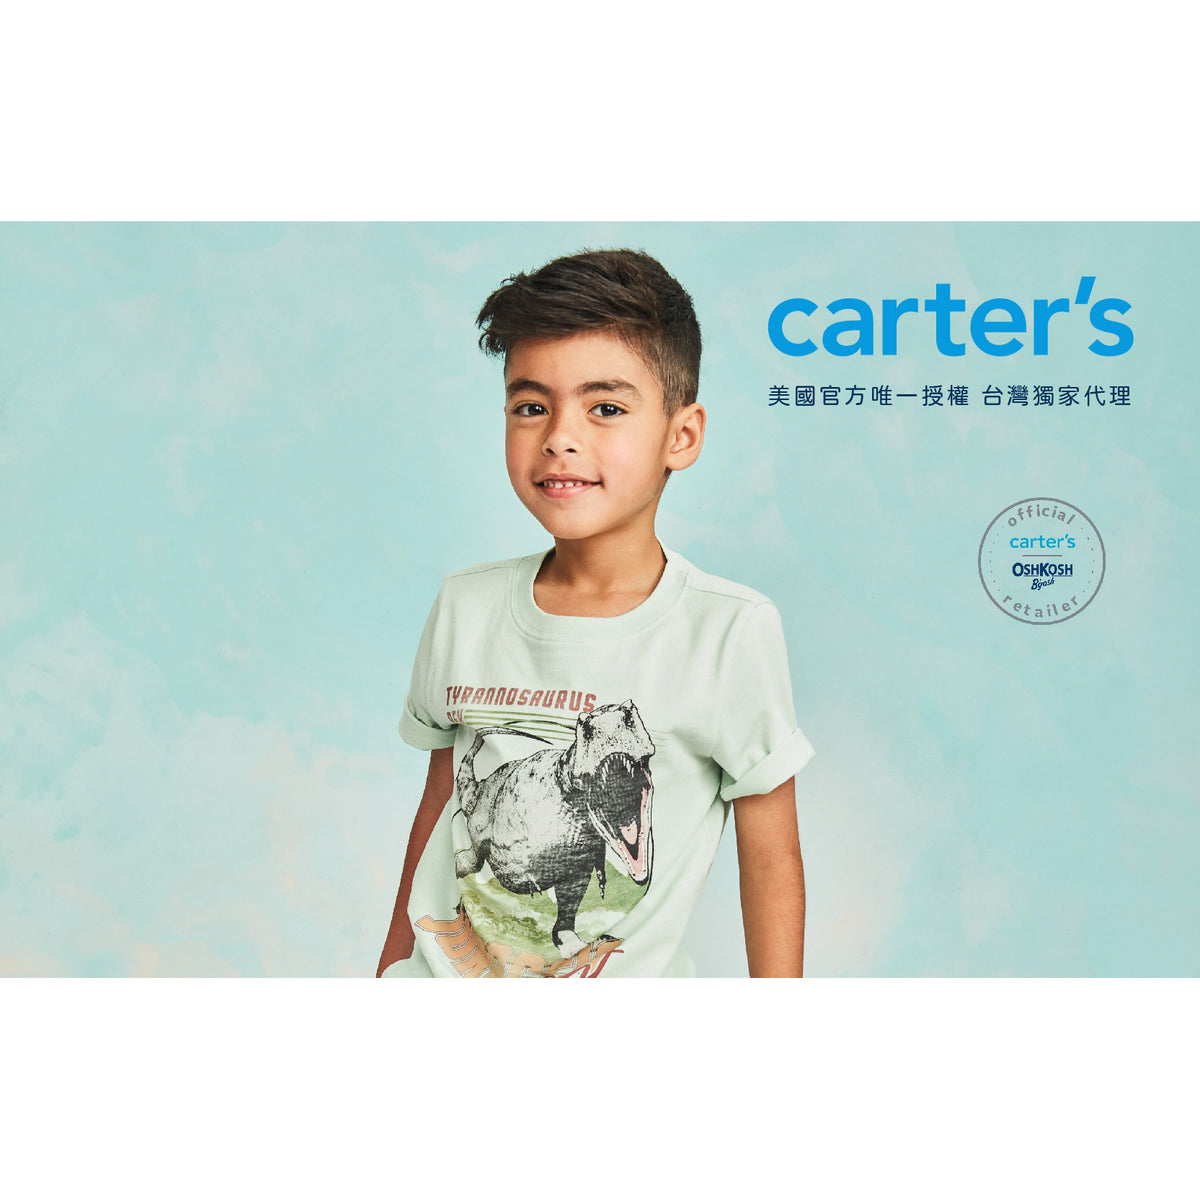 Carter's 鳳梨去度假2件組套裝(6-8)